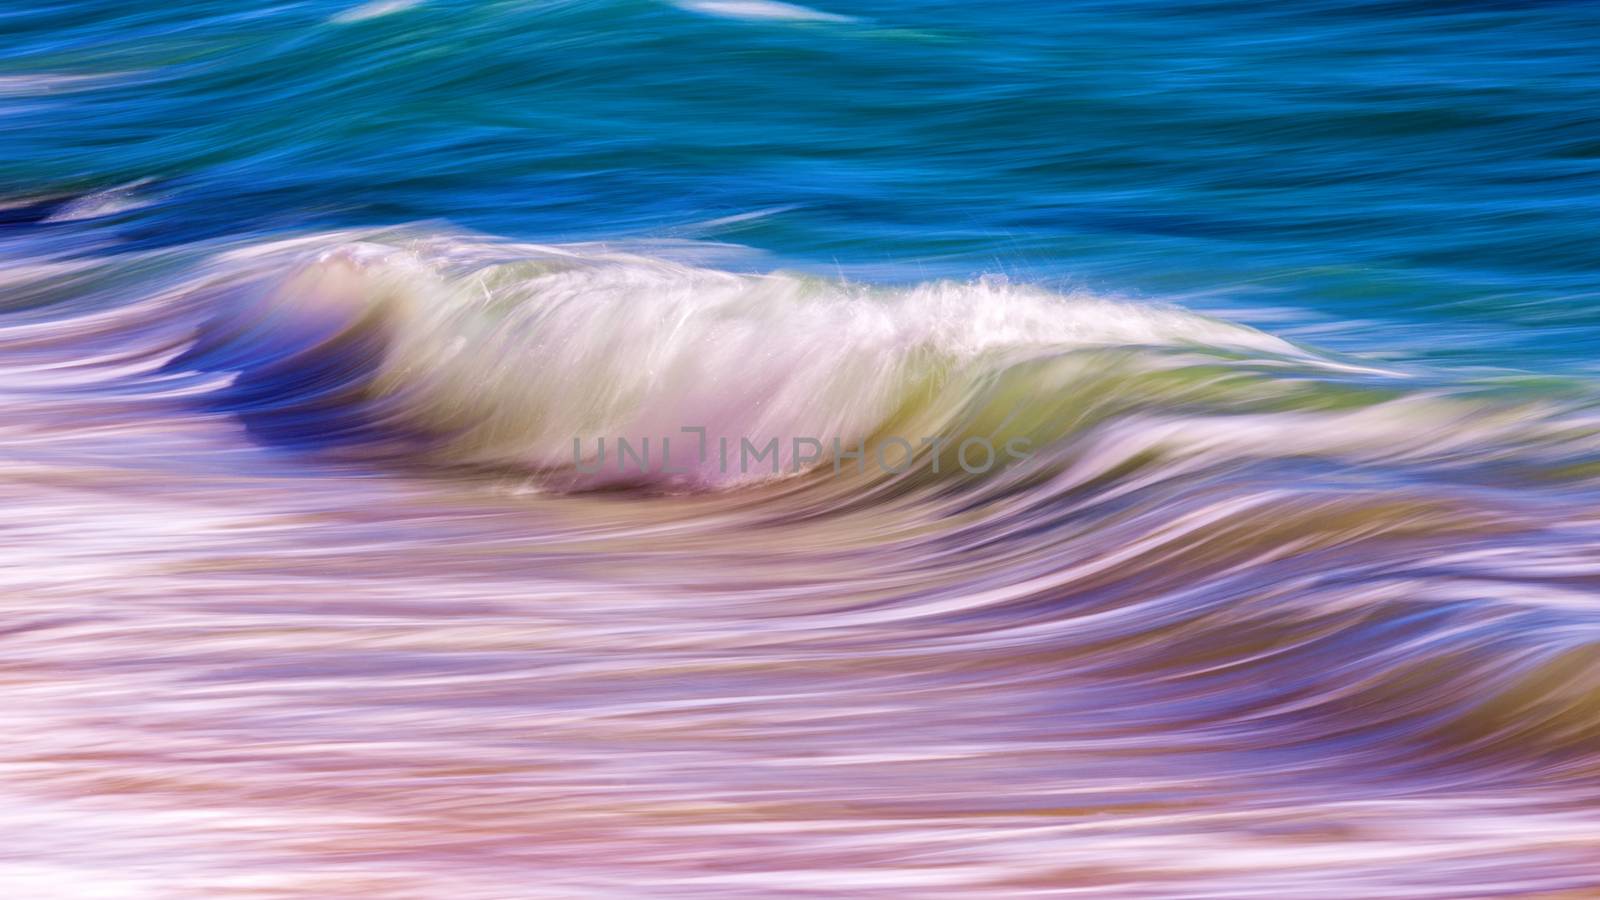 Long exposure waves by Digoarpi